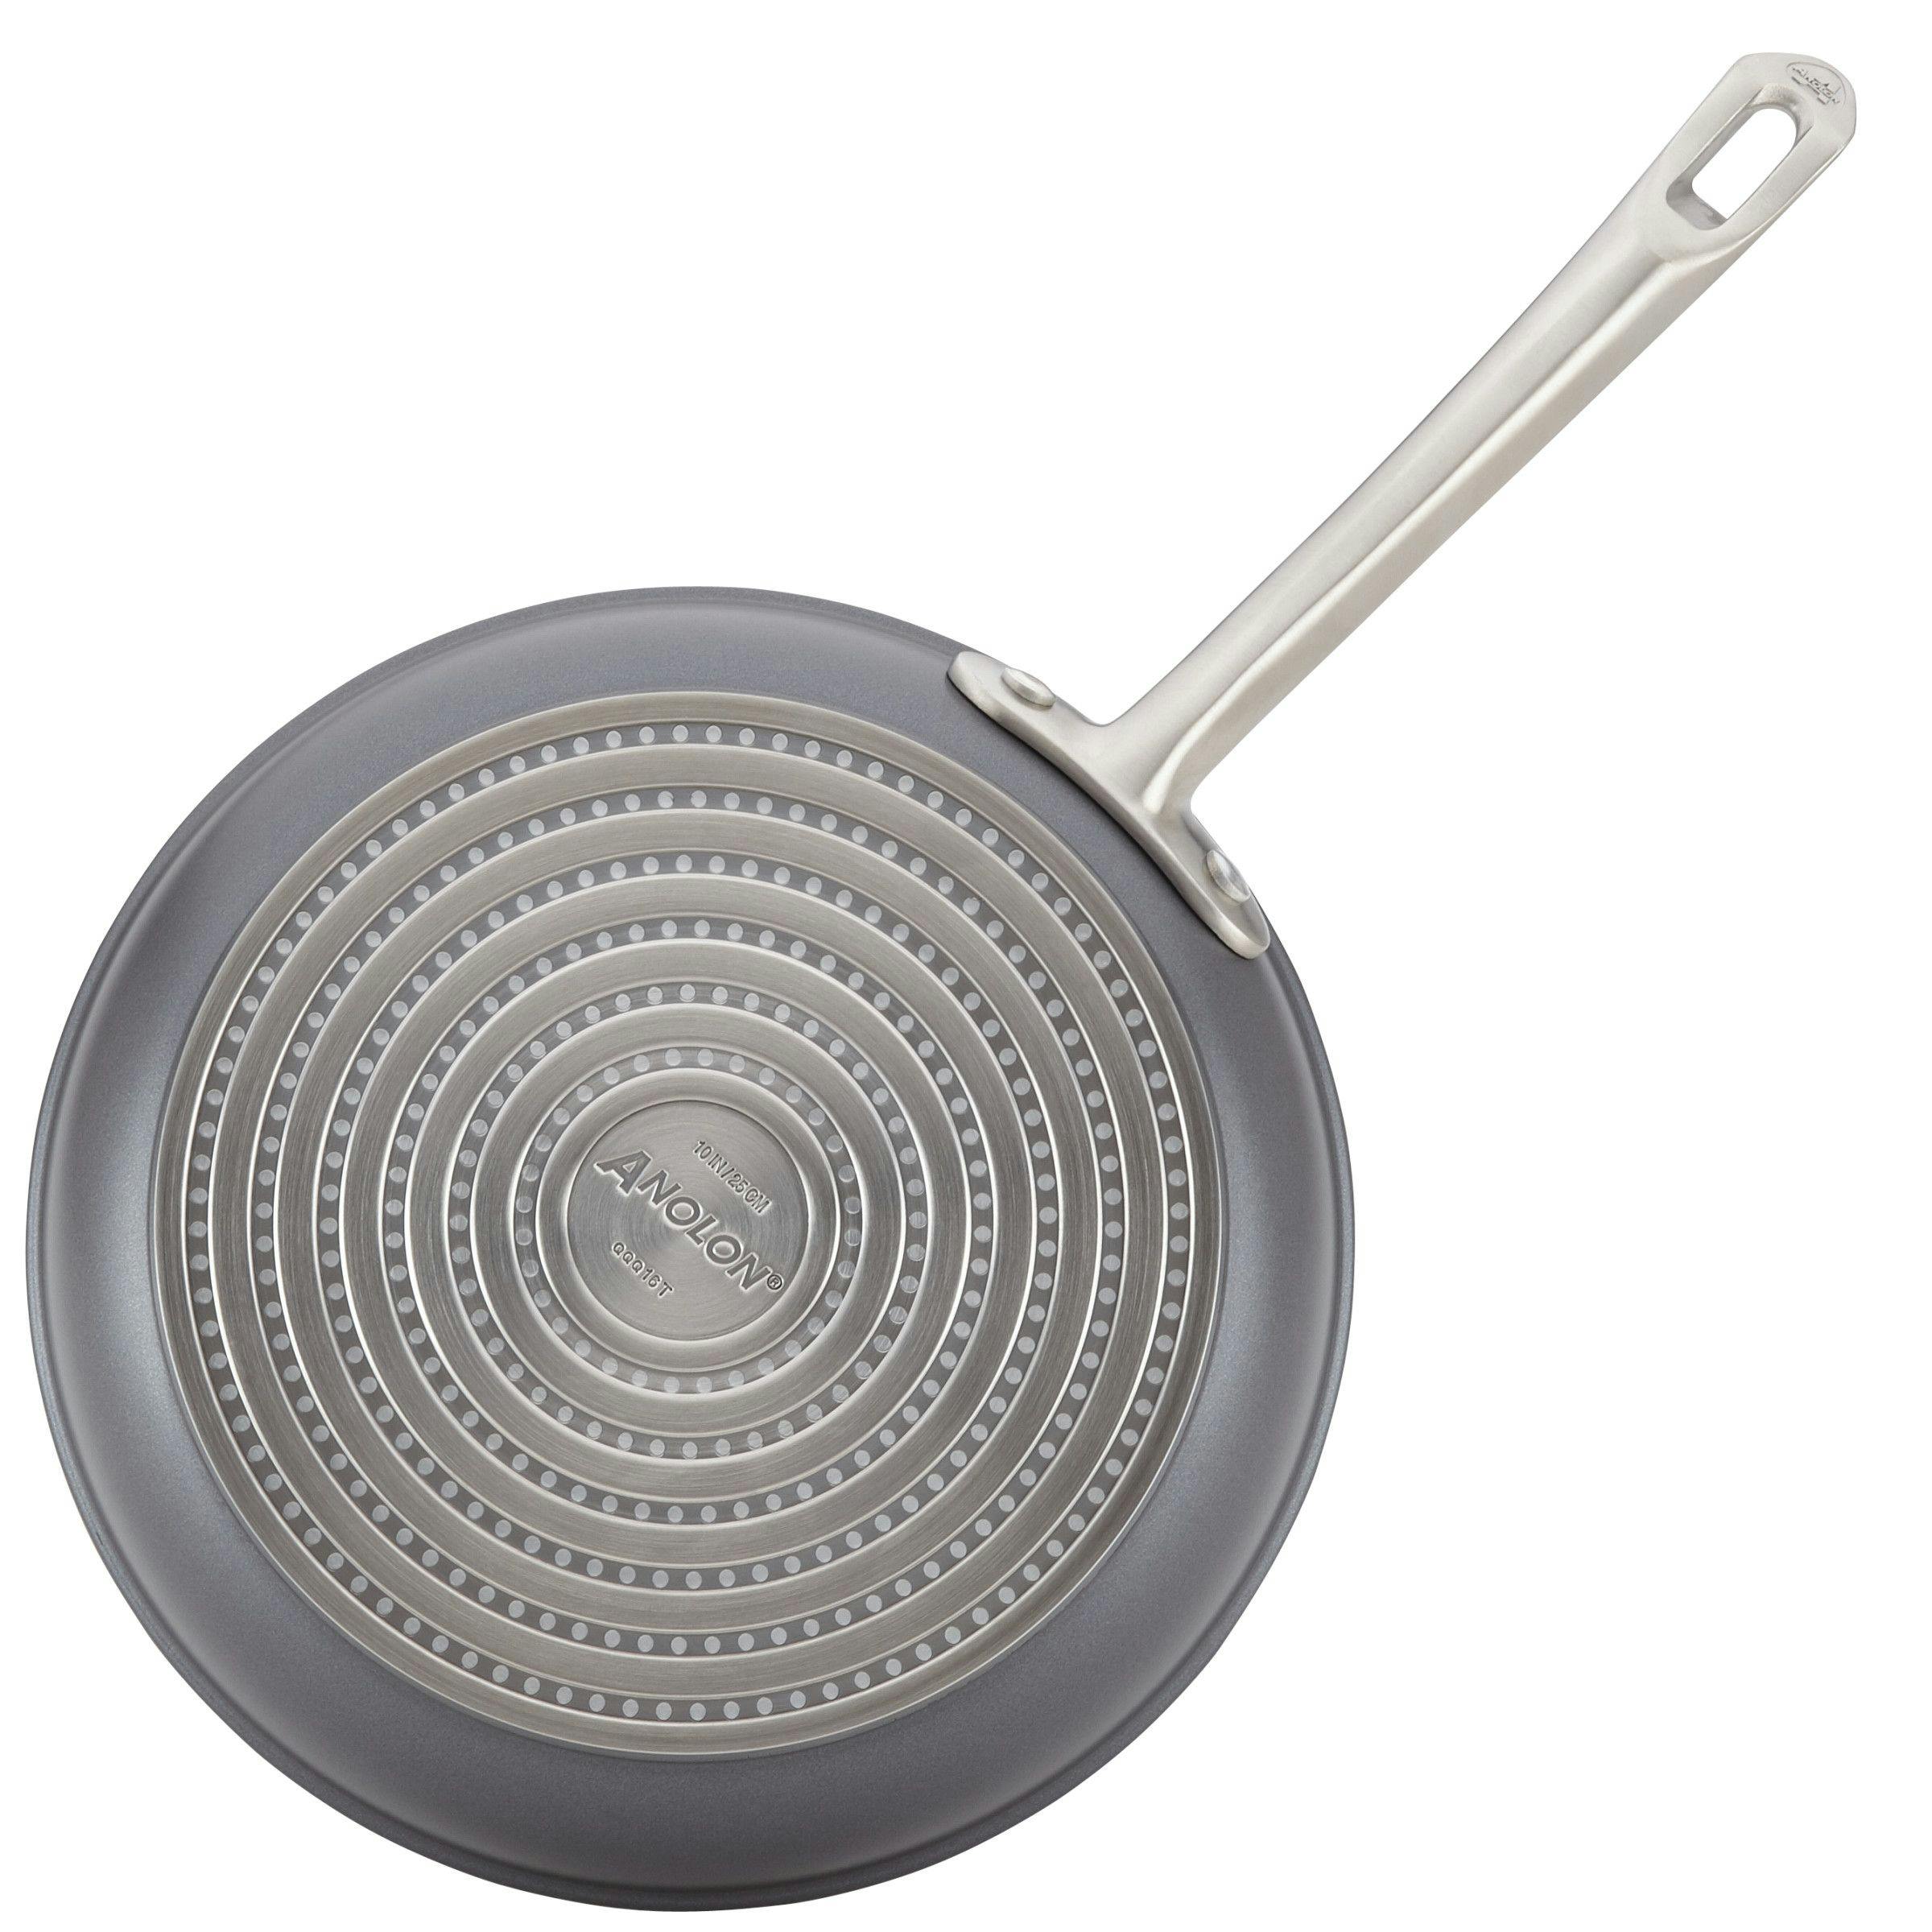  Anolon X Hybrid Nonstick Cookware Induction / Pots and Pans  Set, 10 Piece - Dark Gray: Home & Kitchen